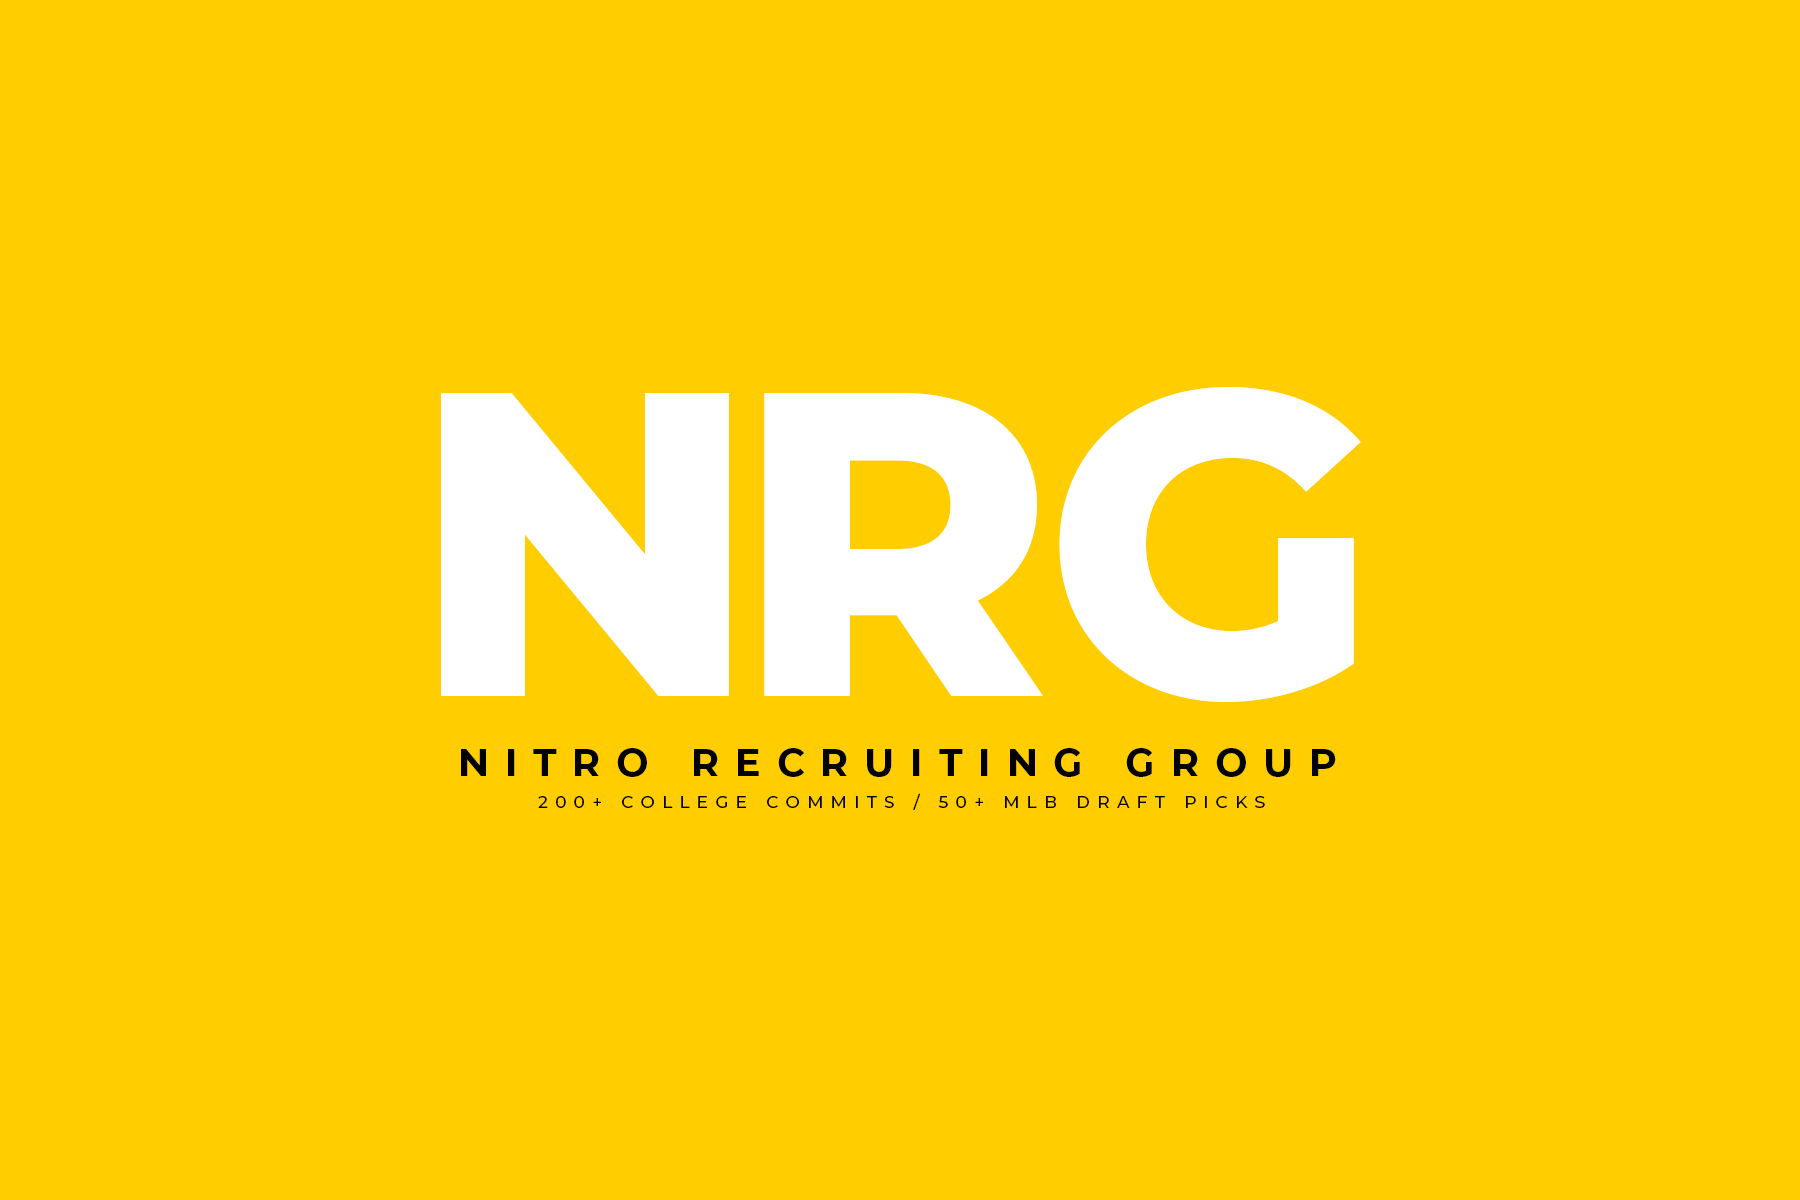 Nitro Recruiting Group